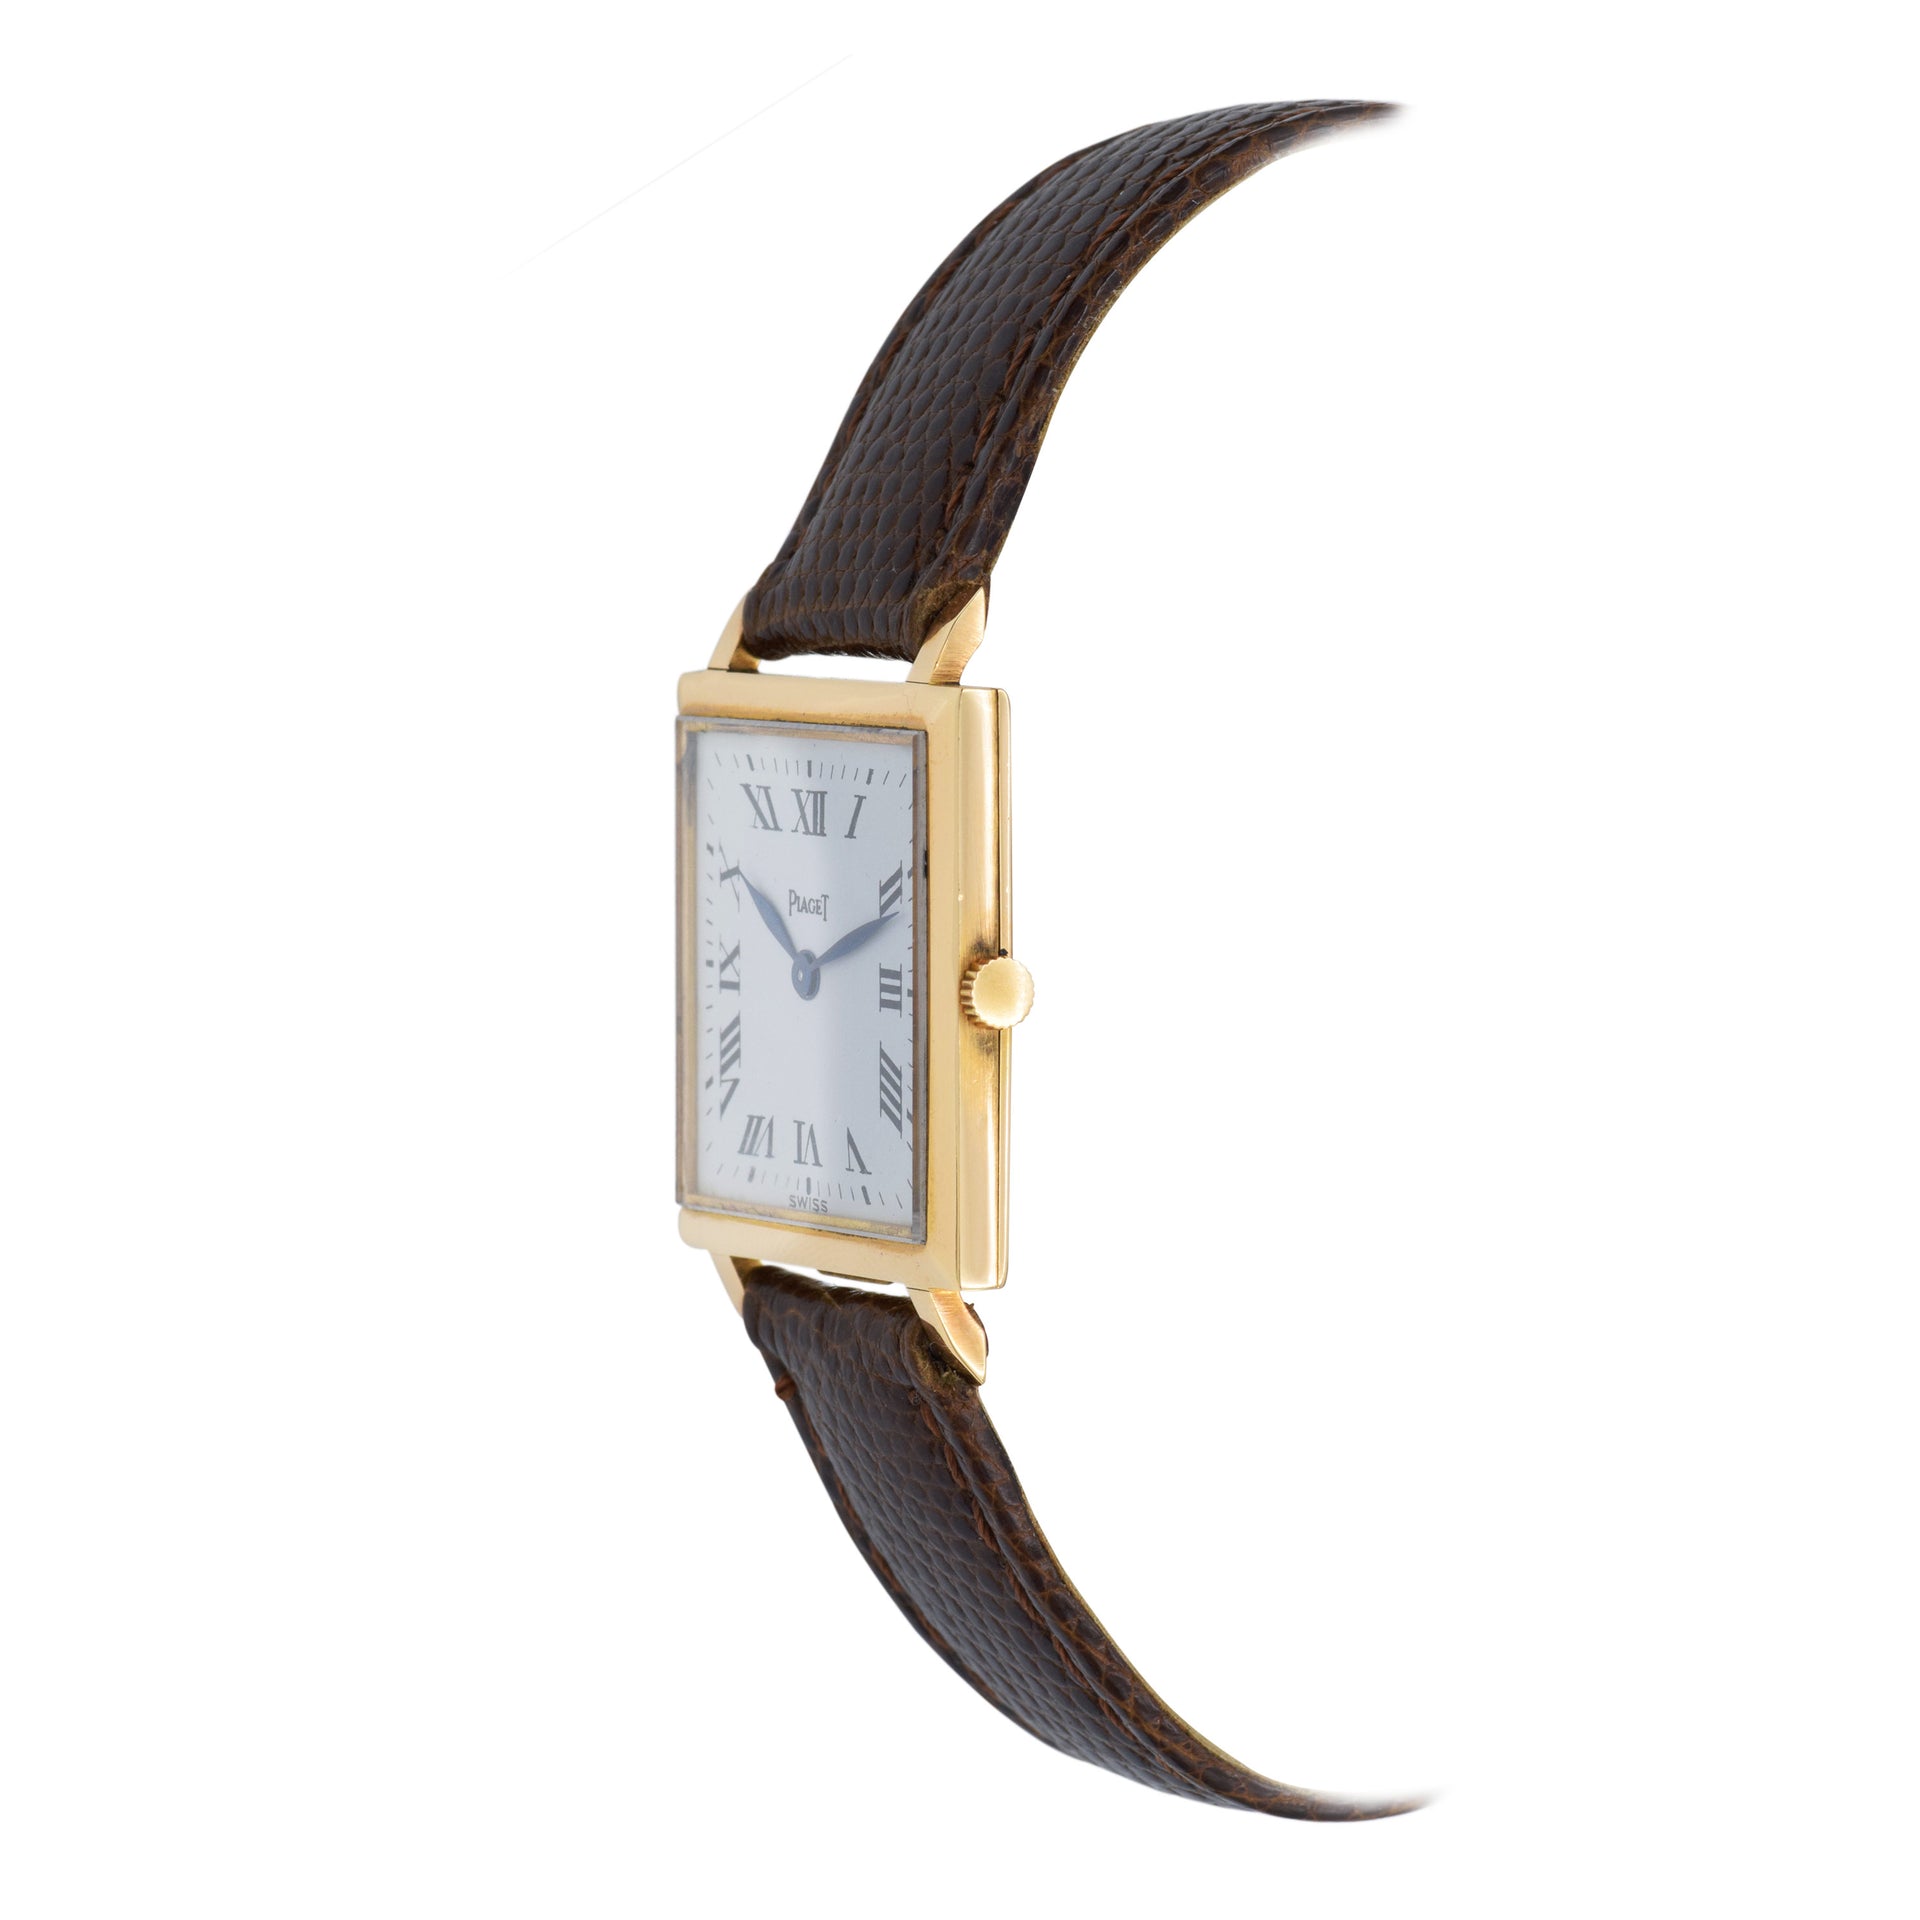 Vintage 1970s Piaget Watch